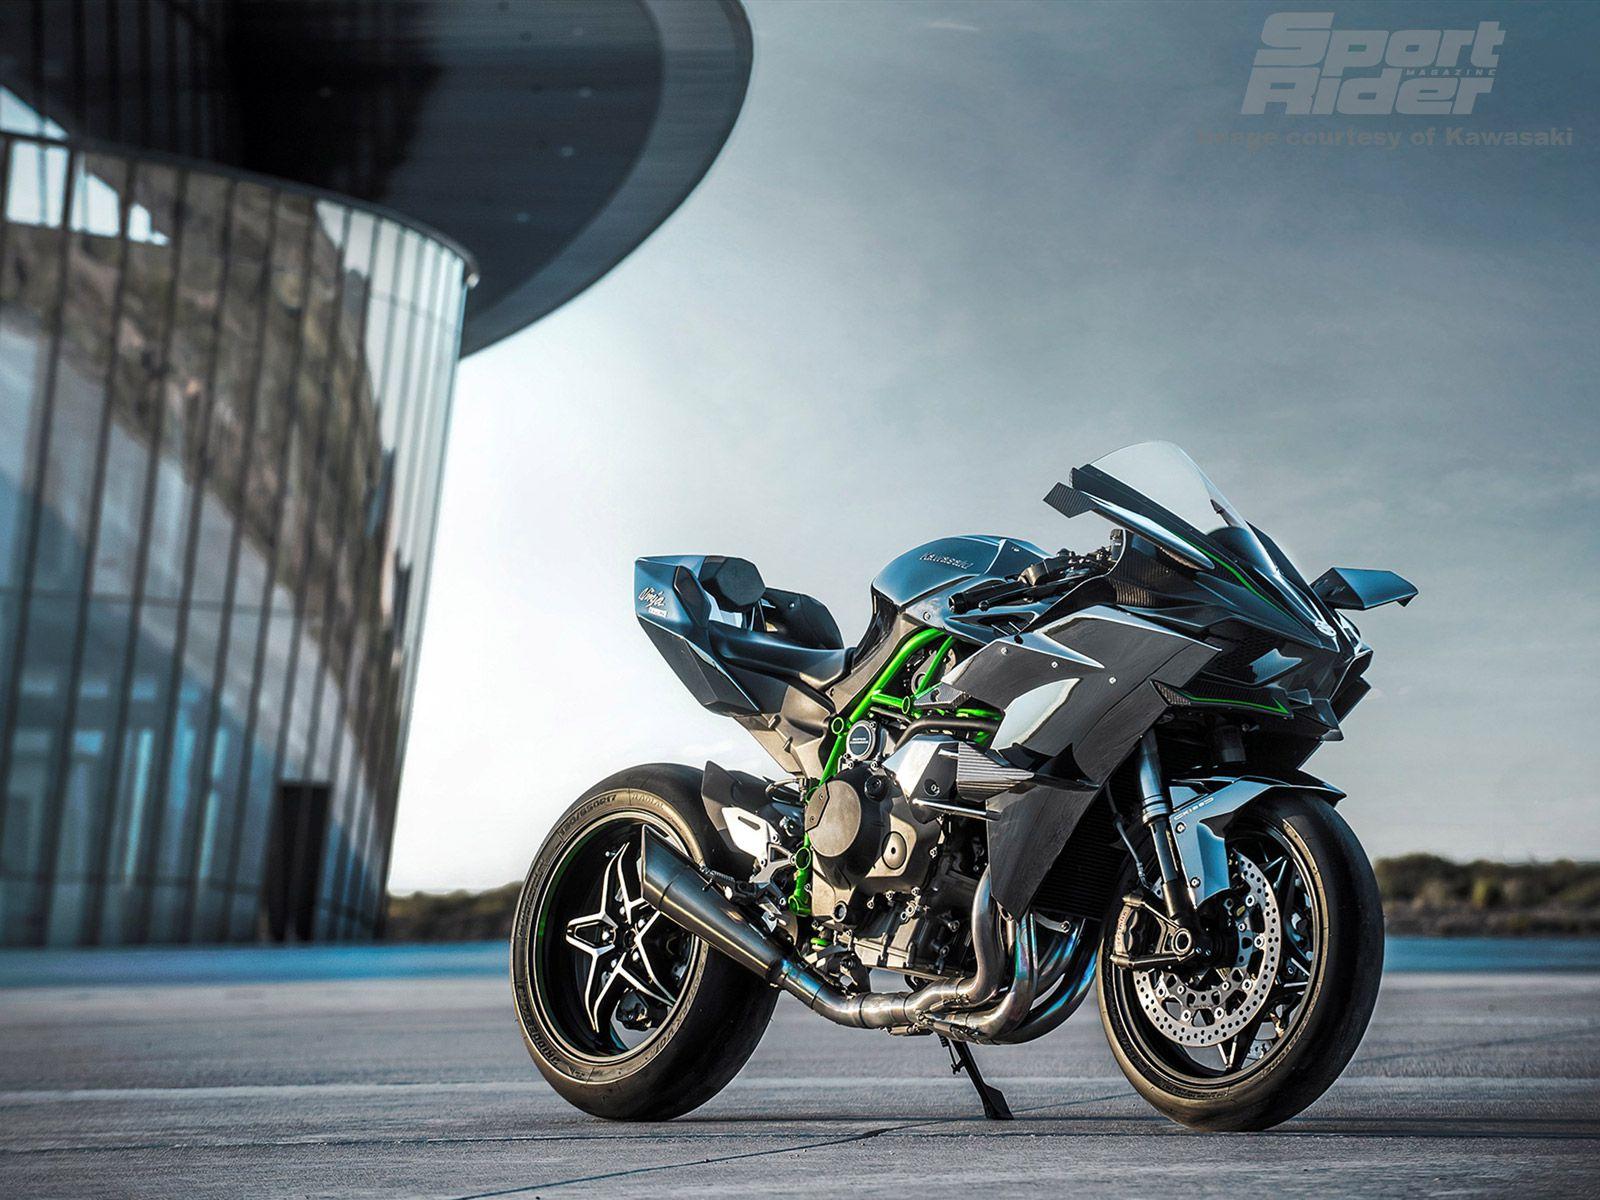 Image Gallery: 2015 Kawasaki Ninja H2R